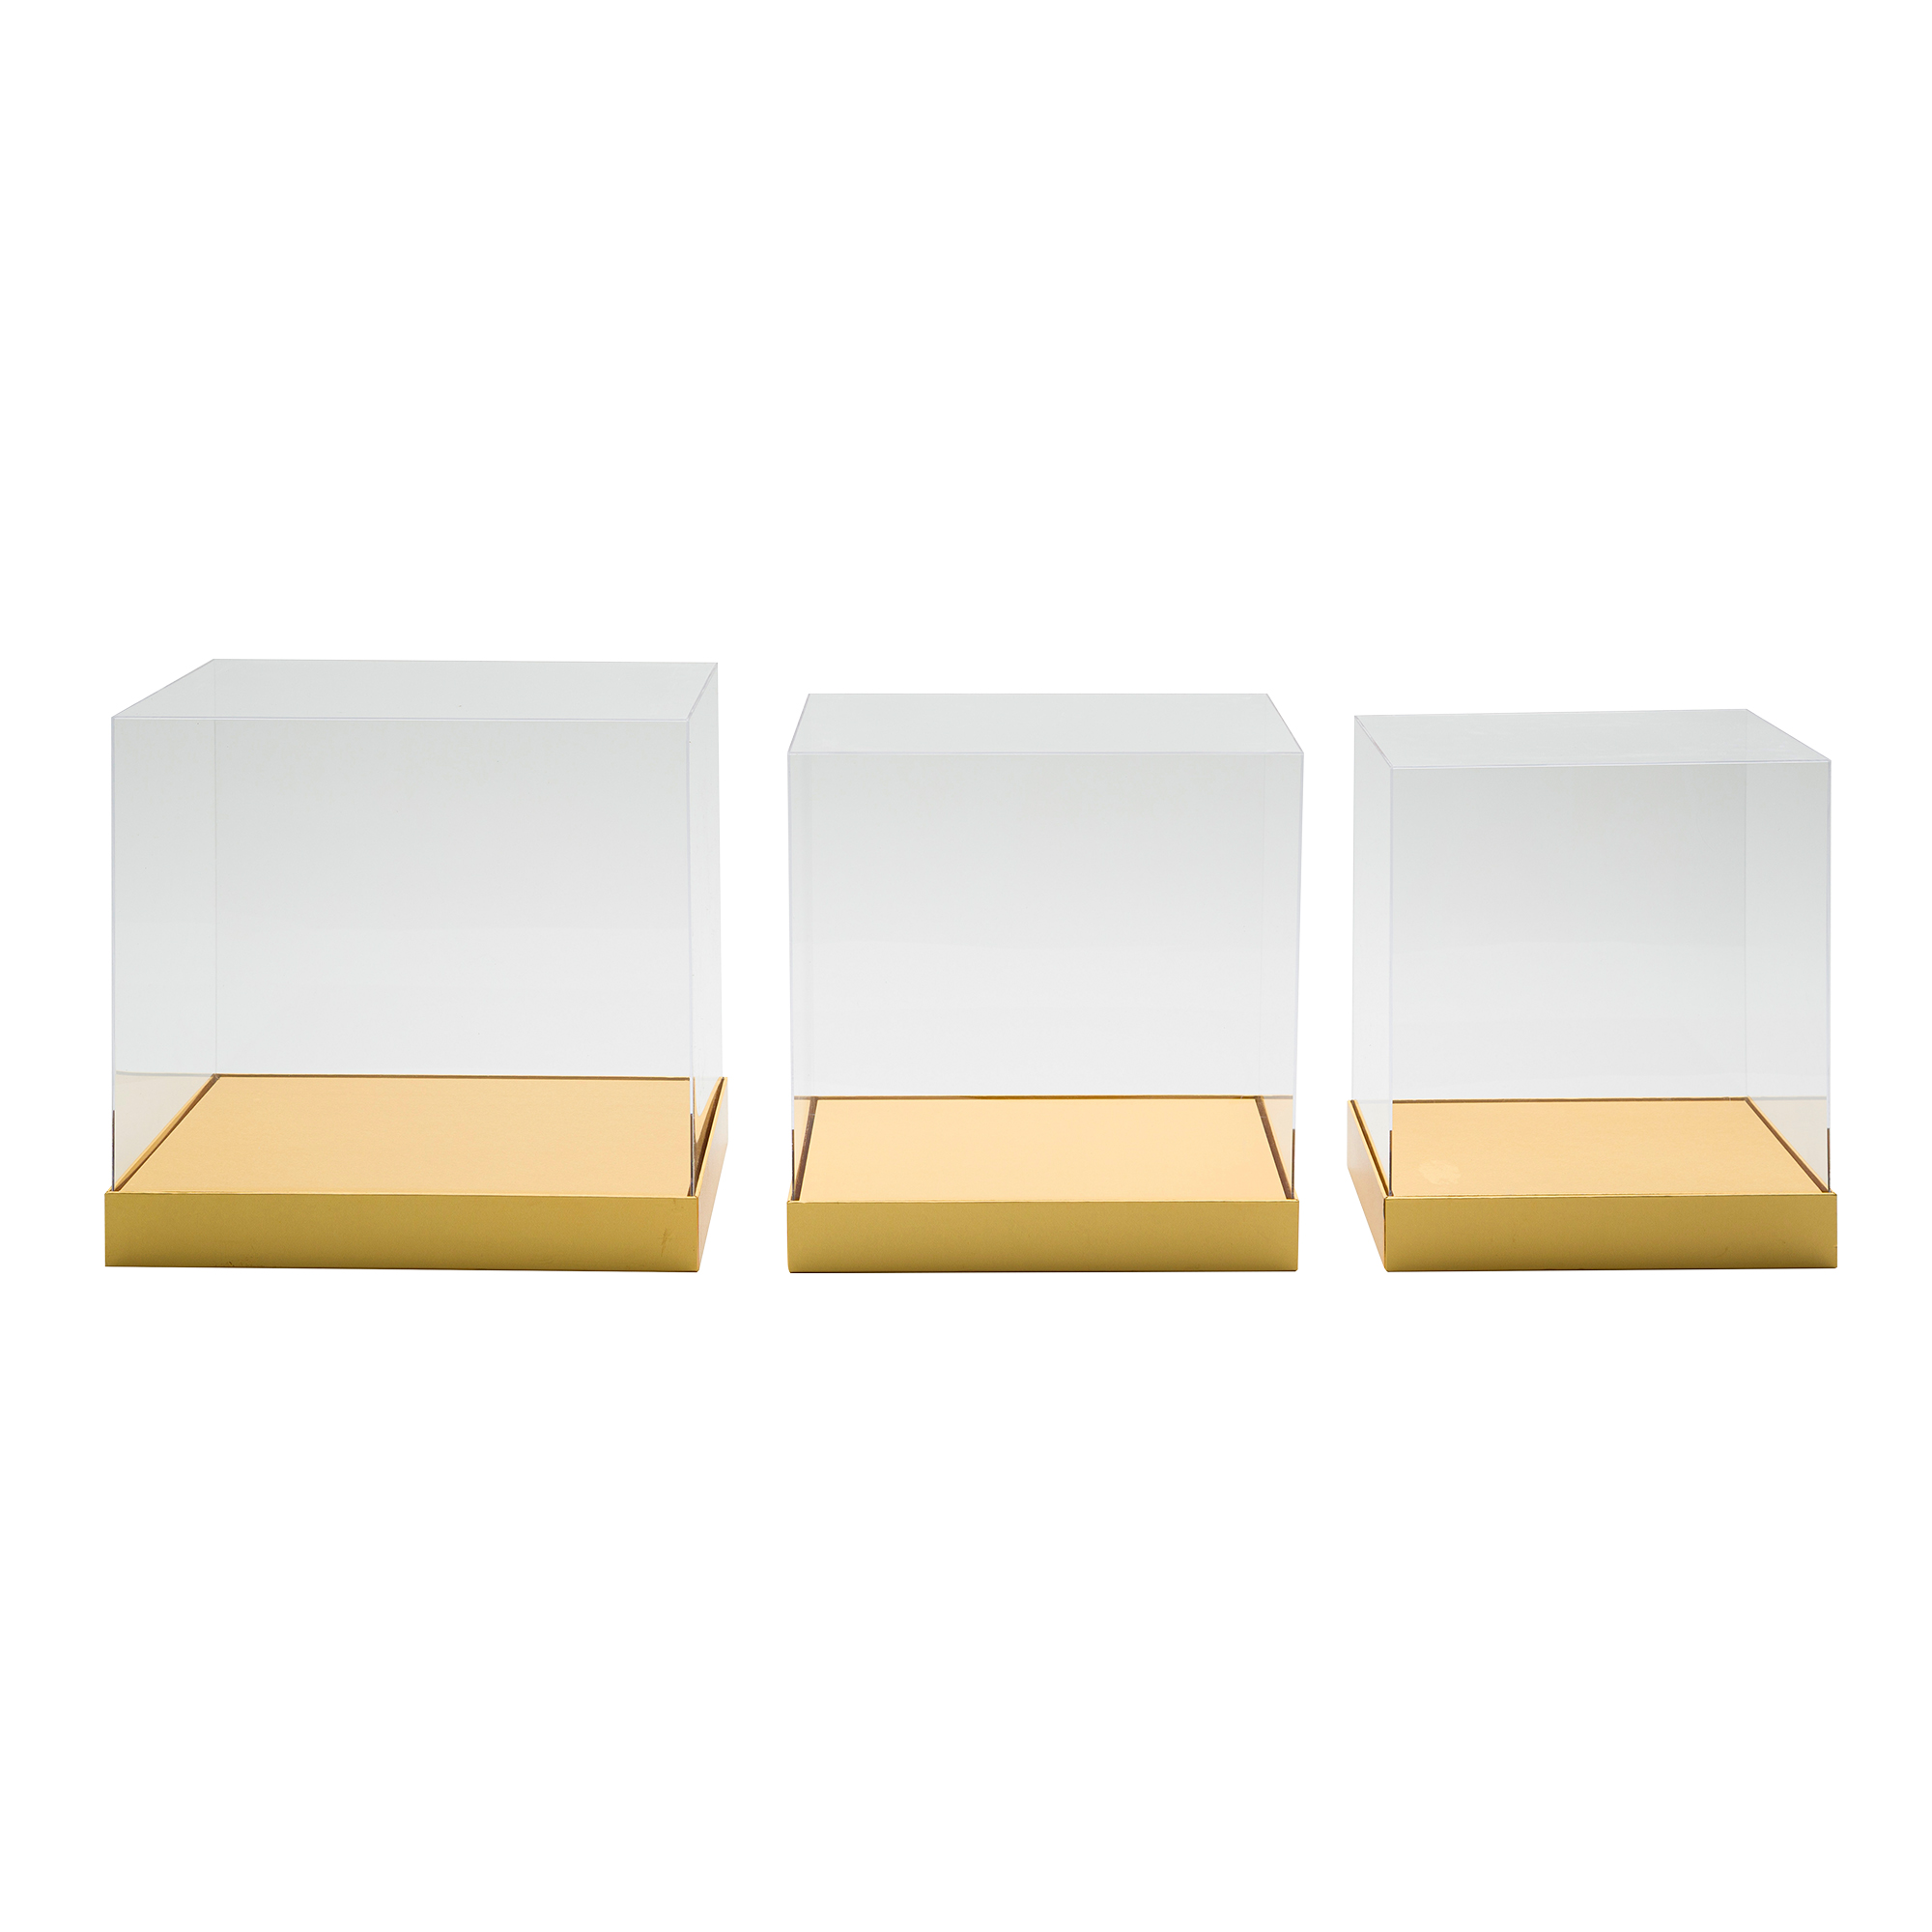 Acrylic Gift Box 3pc/set - Gold